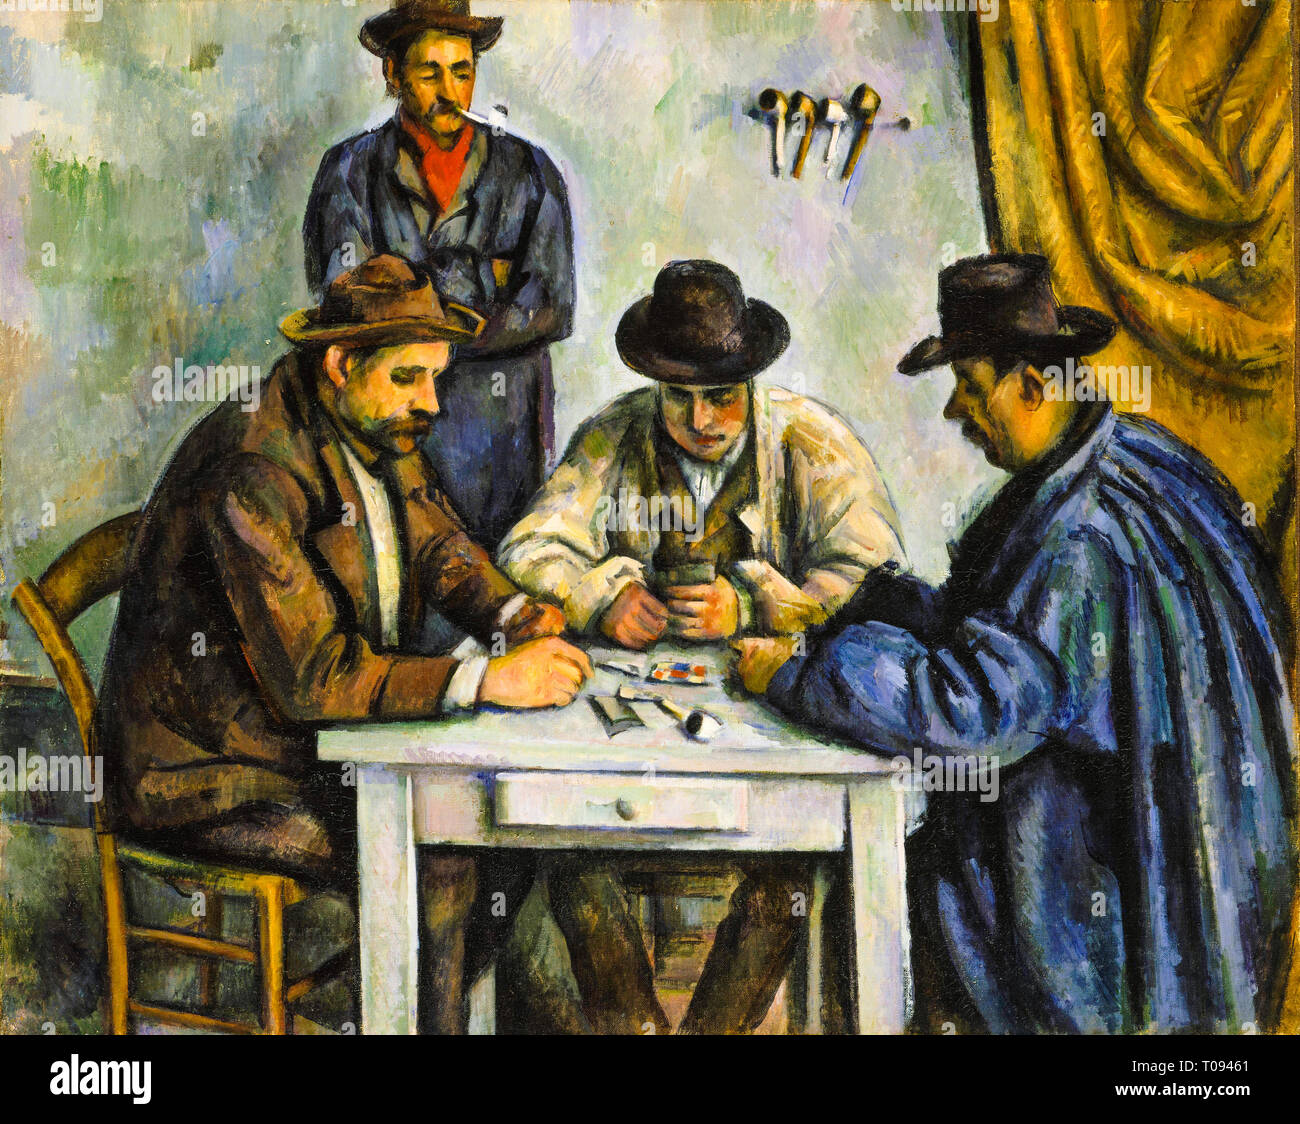 Paul Cézanne, die Kartenspieler, Post-Impressionismus Gemälde, c. 1890-1892 Stockfoto